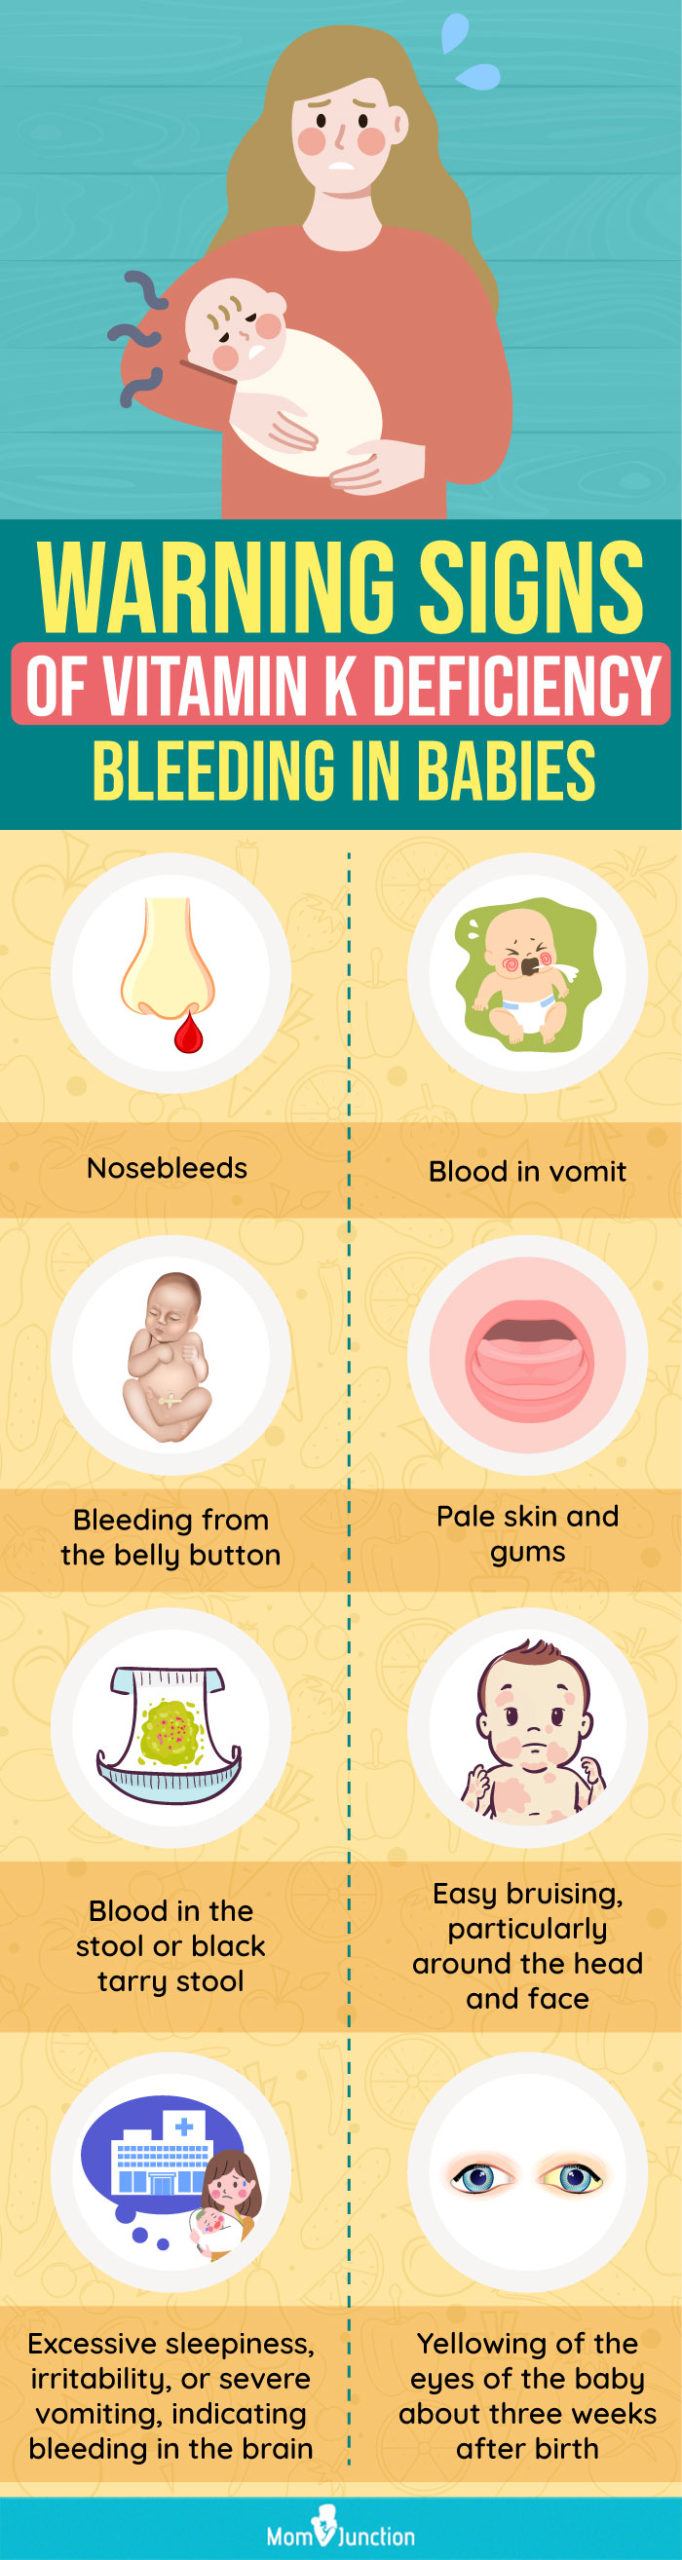 warning signs of vitamin k deficiency bleeding in babies (infographic)